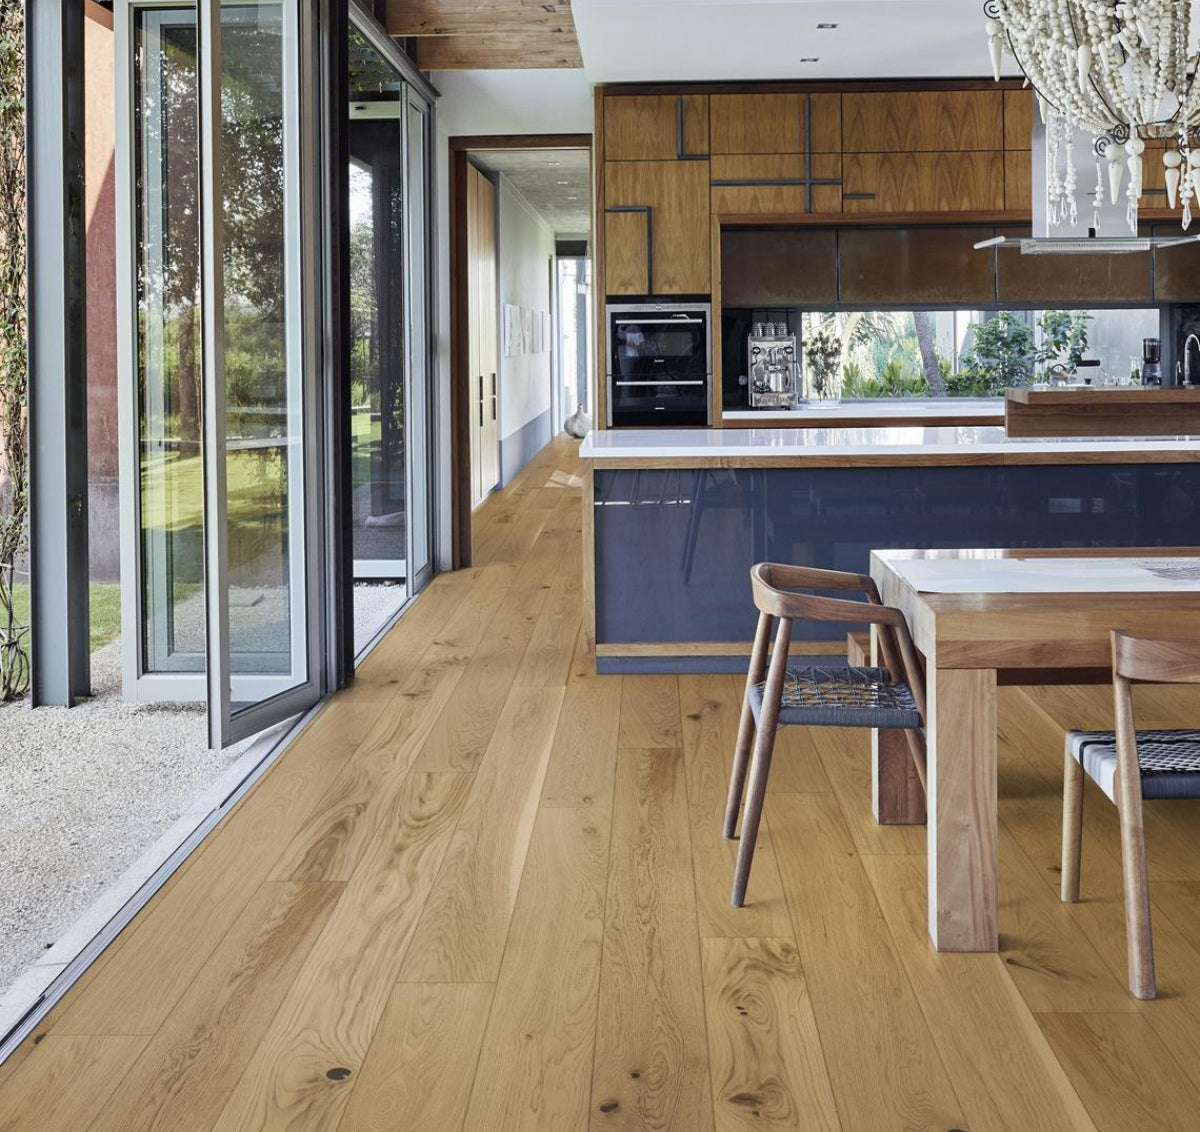 Chris Love Julia Faye Stuga Hardwood Flooring featured in kitchen. Blonde oak hardwood wood flooring.